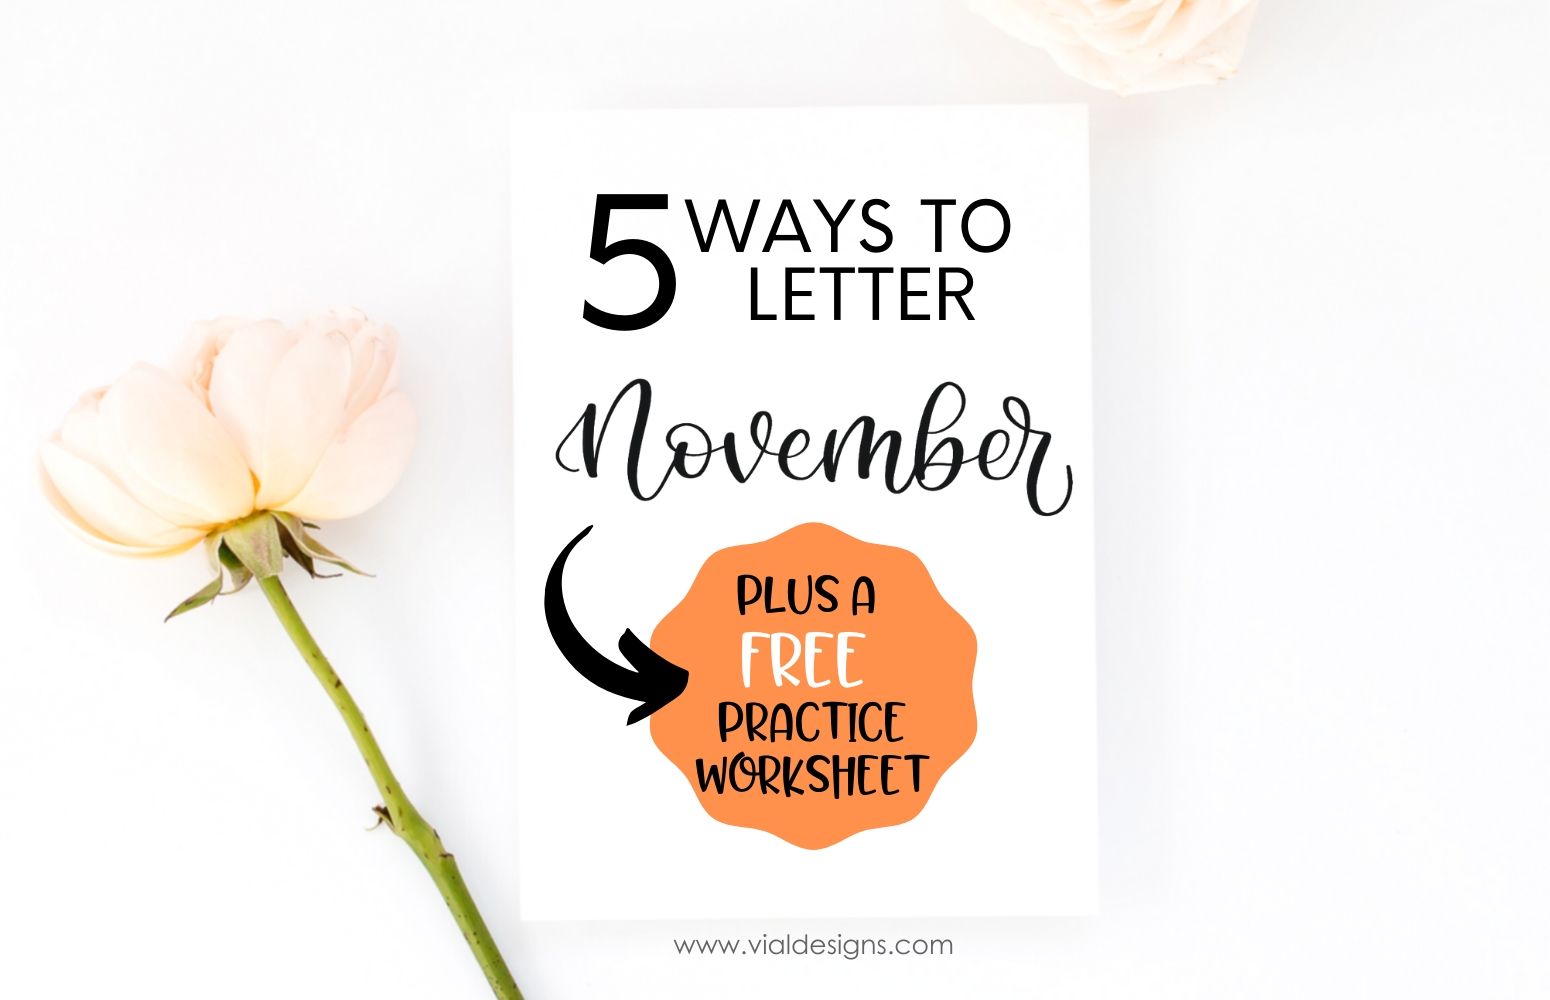 5 Ways To Letter November + Free Worksheet